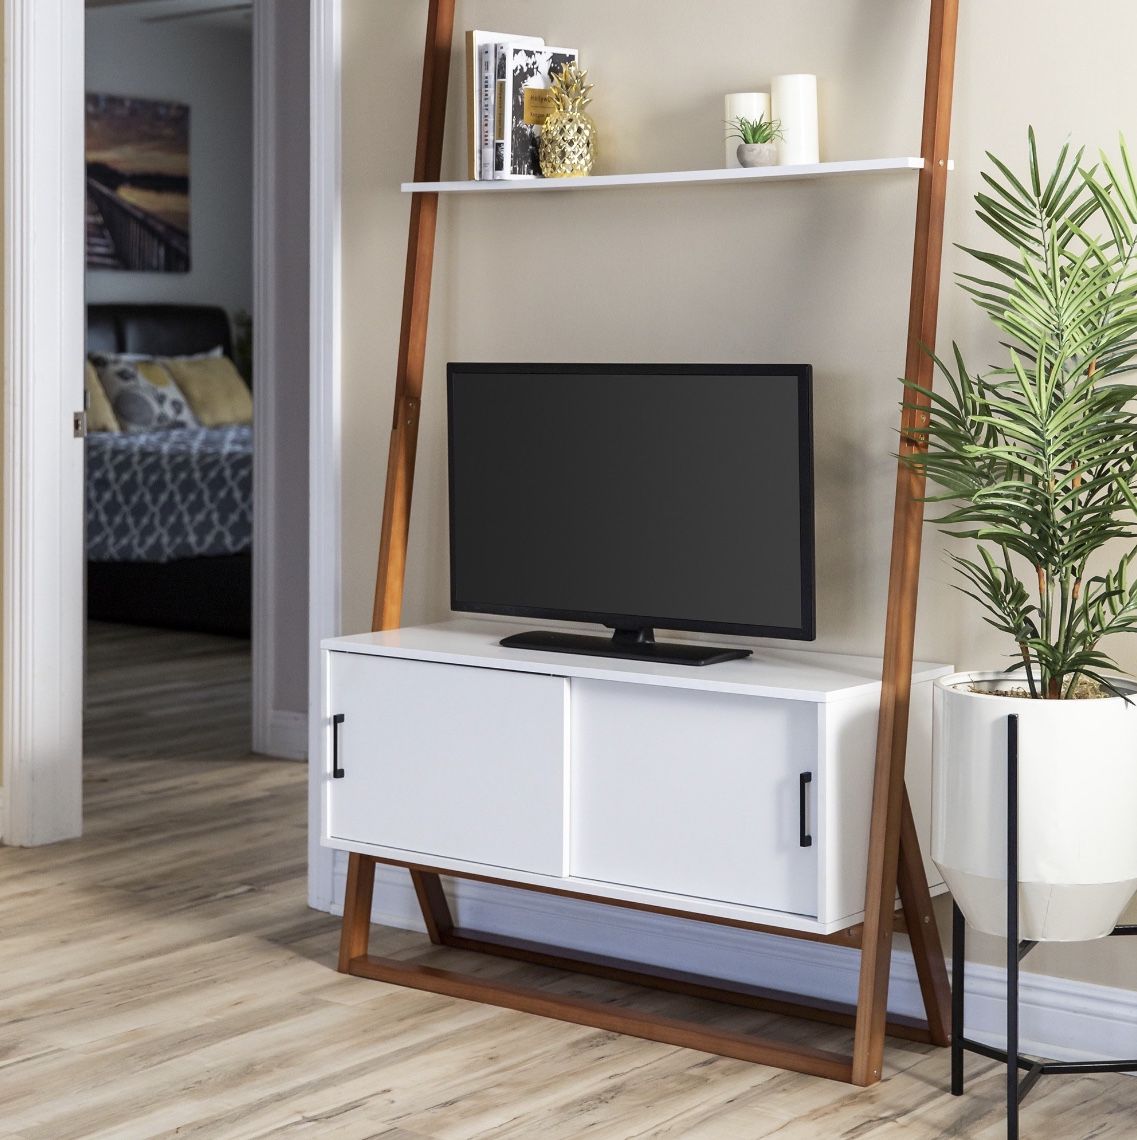 New - 42” Modern Wooden Ladder Shelf TV Stand Media Console w/ Shelves, Storage